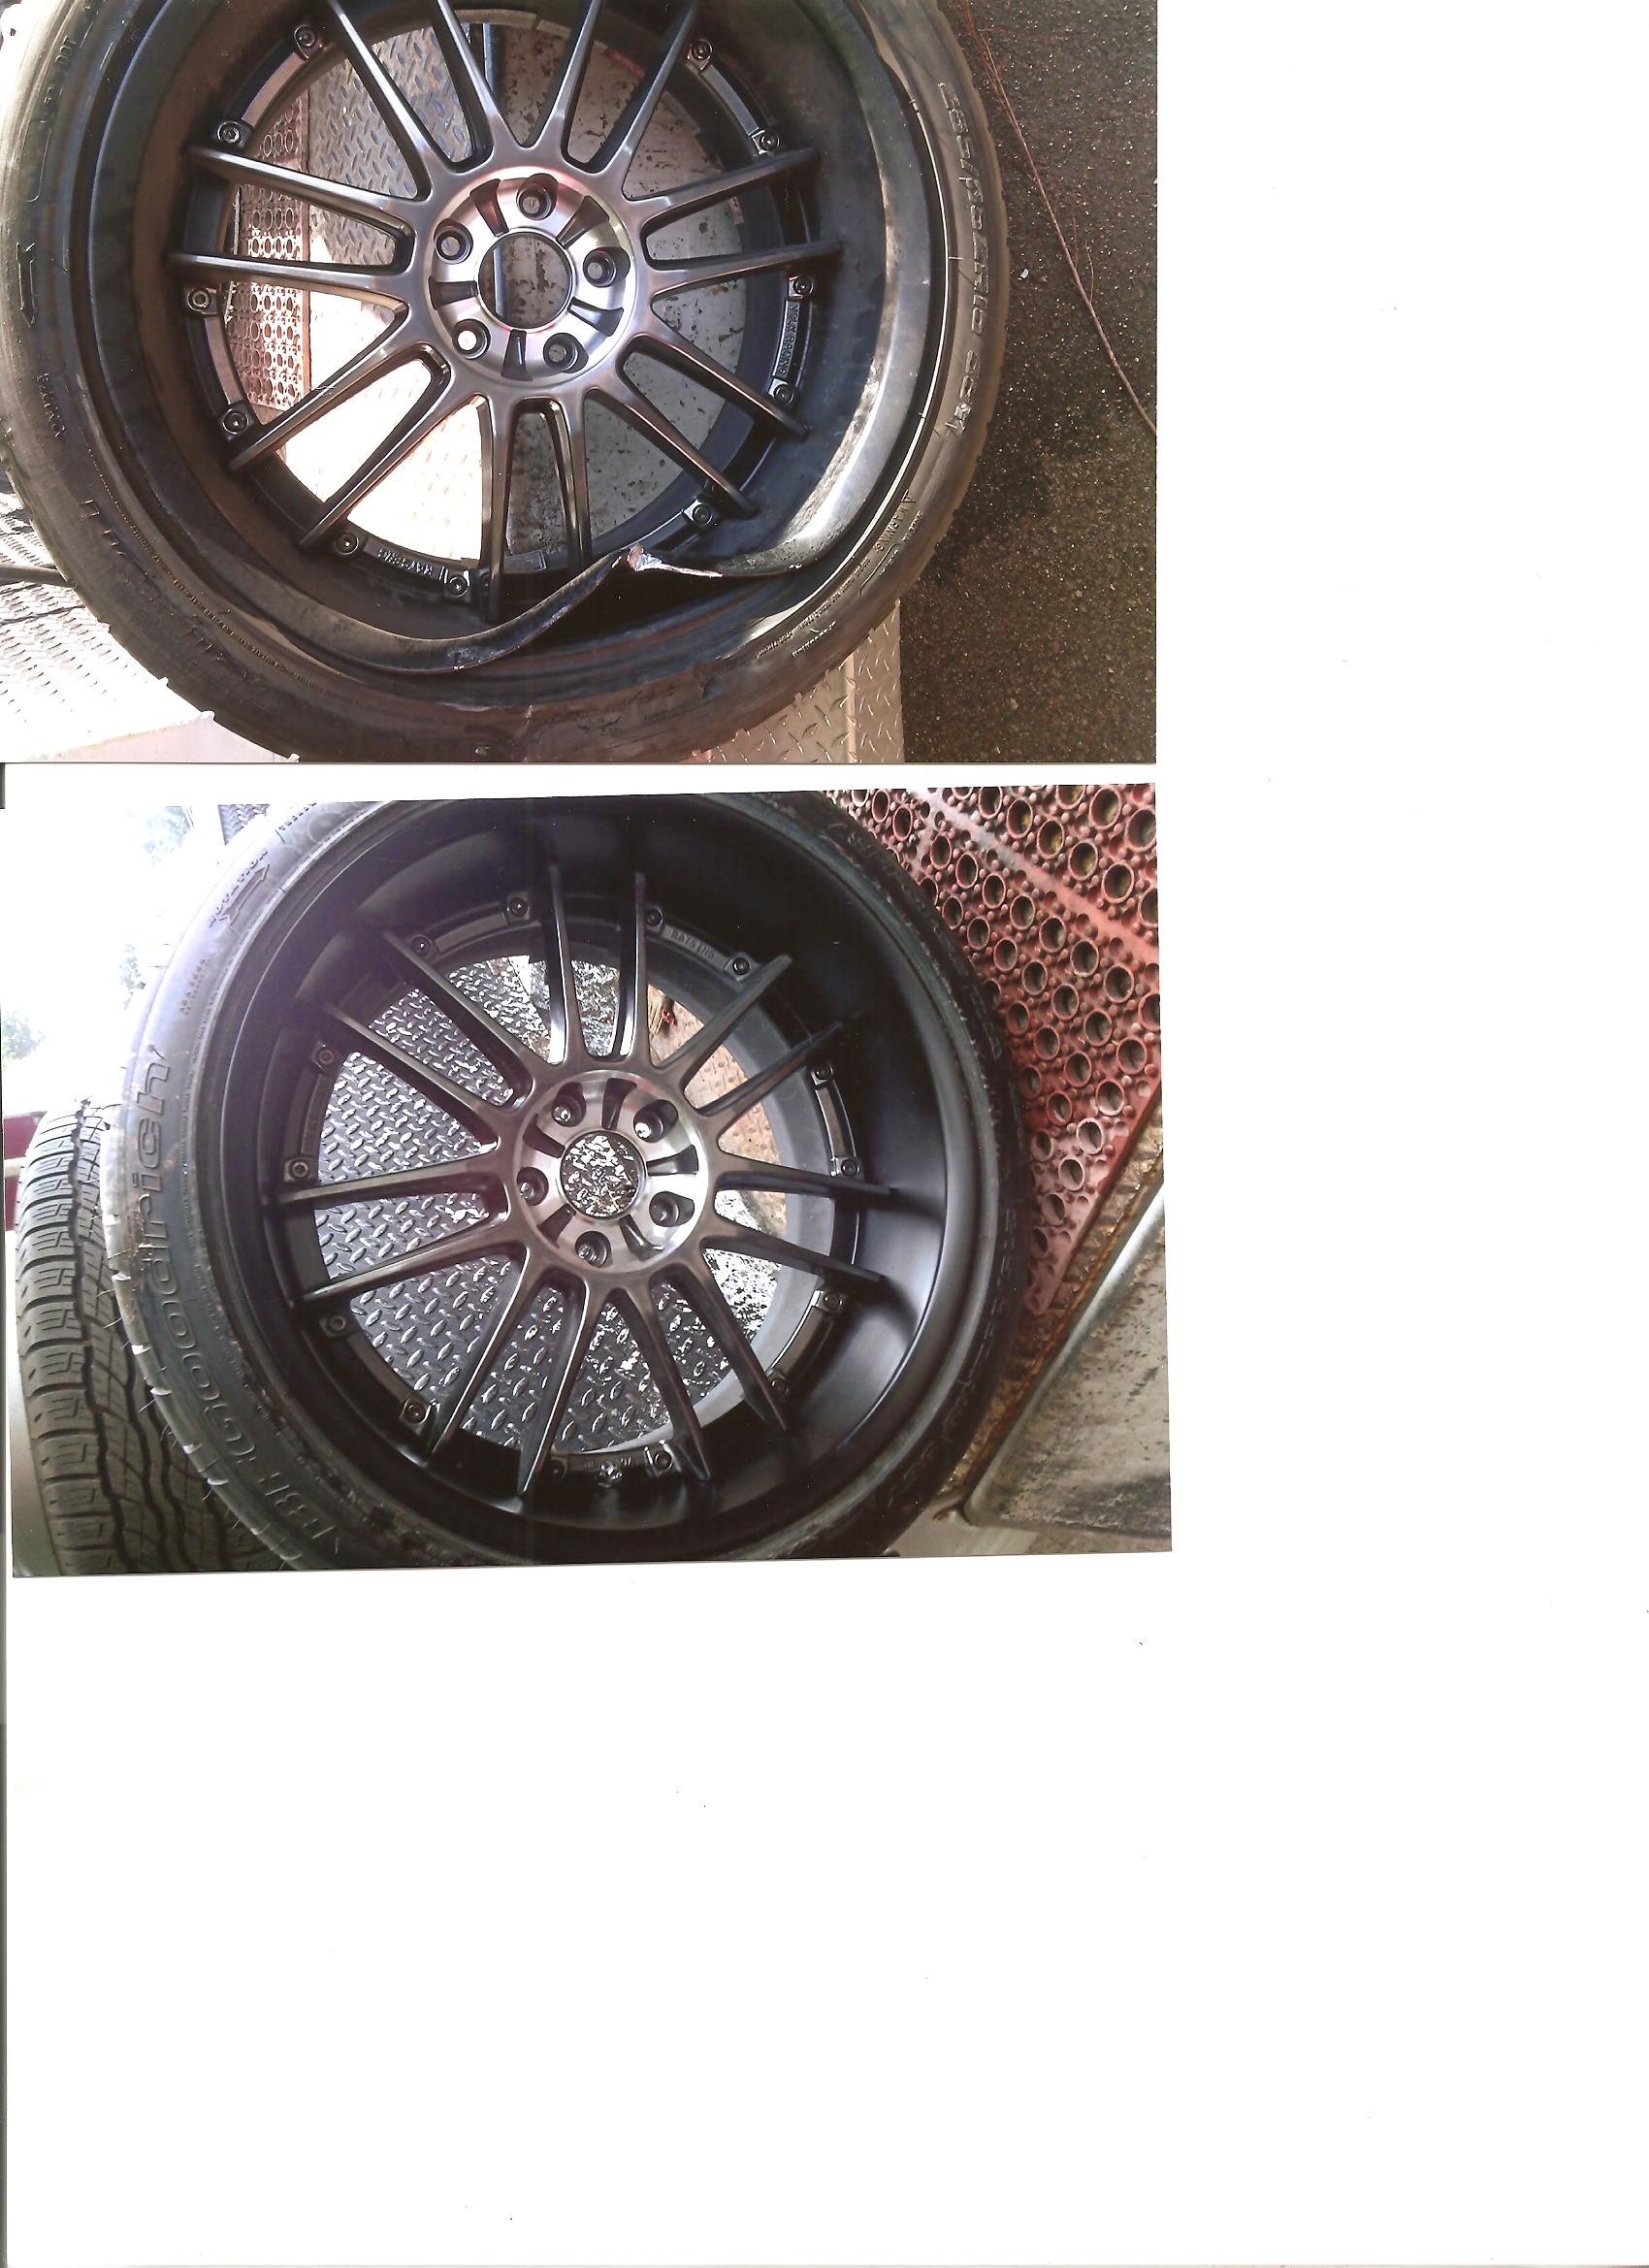 Alloy Wheel Repair Pro Coupons near me in Colorado Springs ...